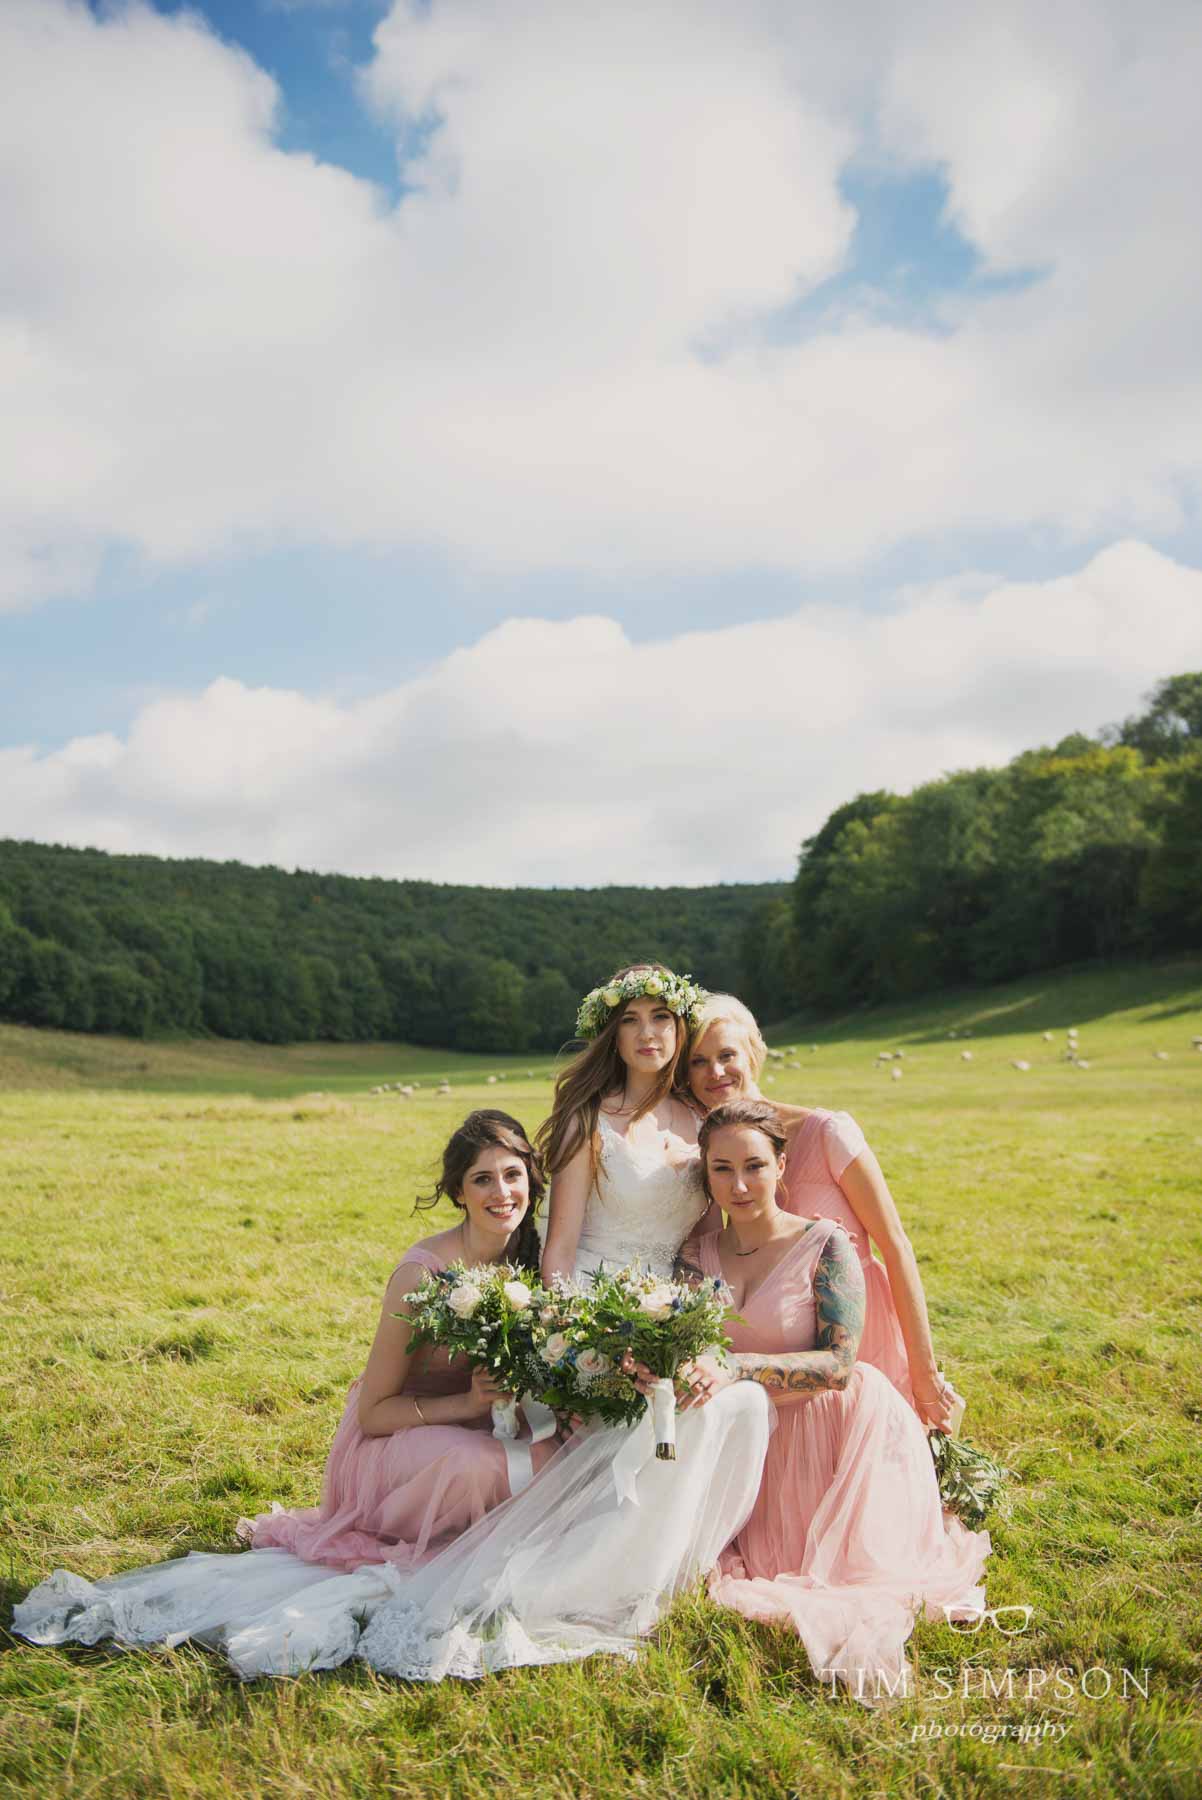 Emma & Bret | Manchester Wedding Photographer | Tim Simpson